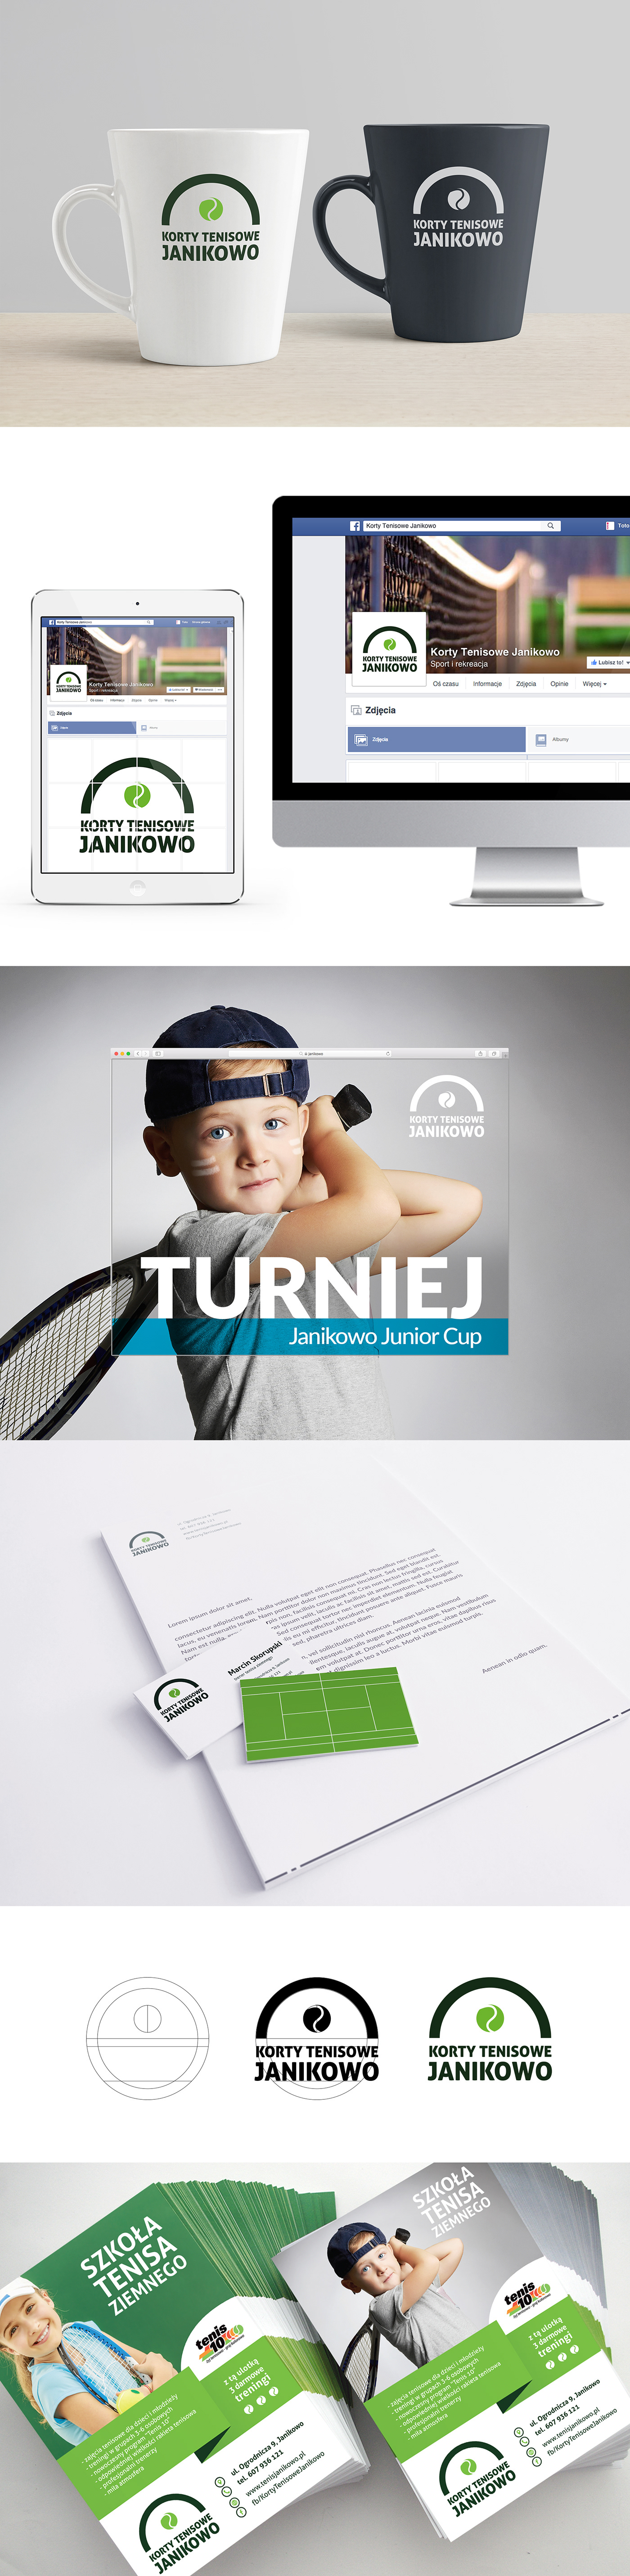 tenis children janikowo korty tennis courts tennis courts brand logo Logotype facebook innovation place sport kids